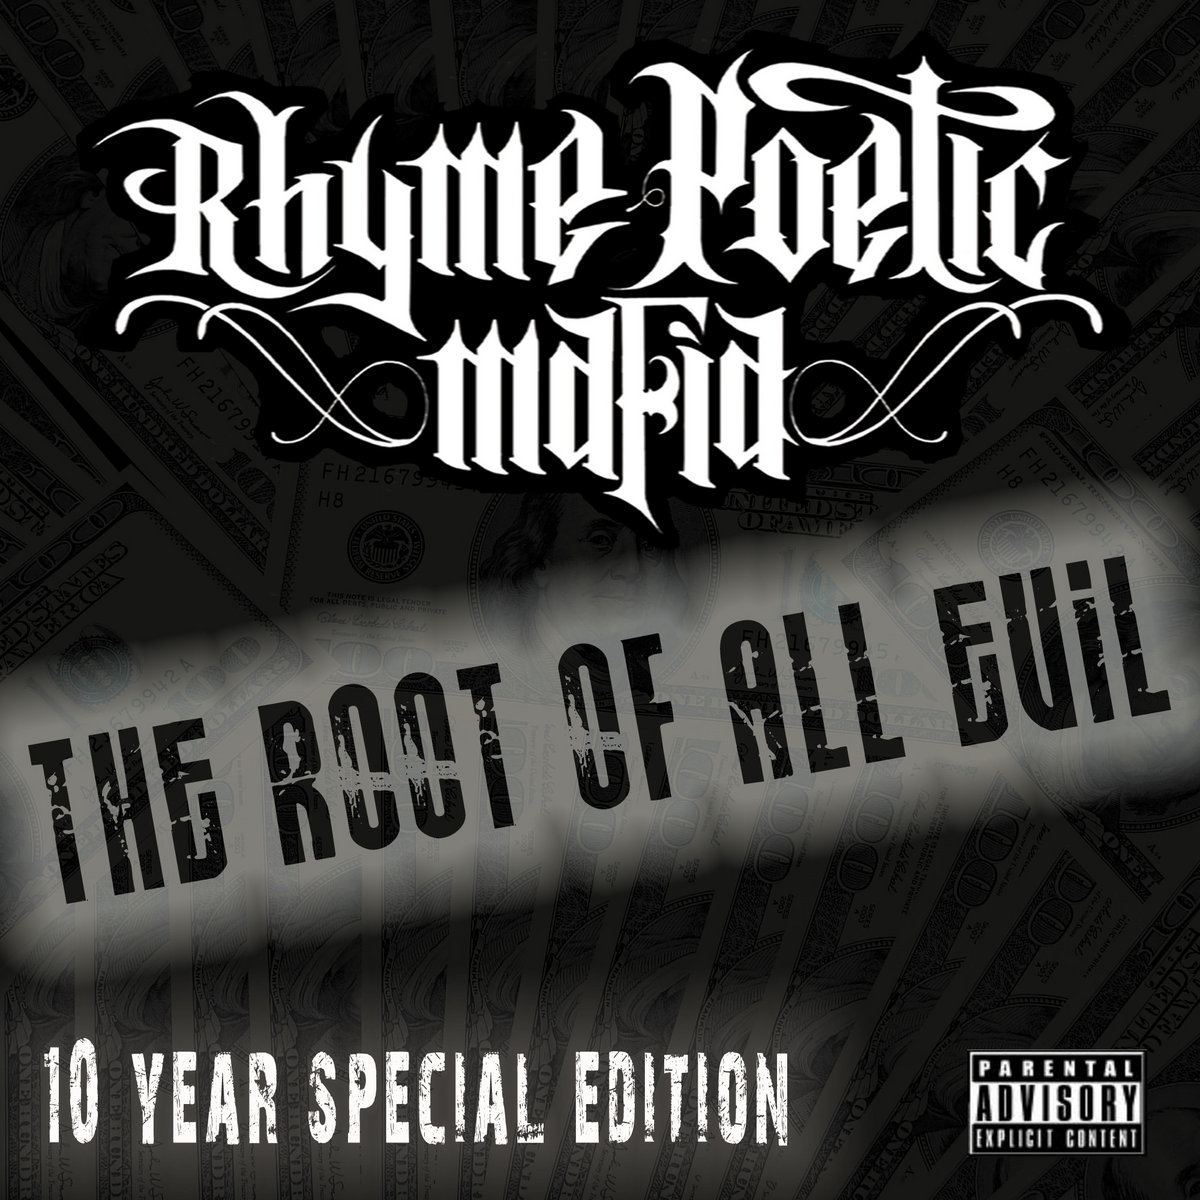 Rhyme Poetic Mafia/The Root Of g-rap